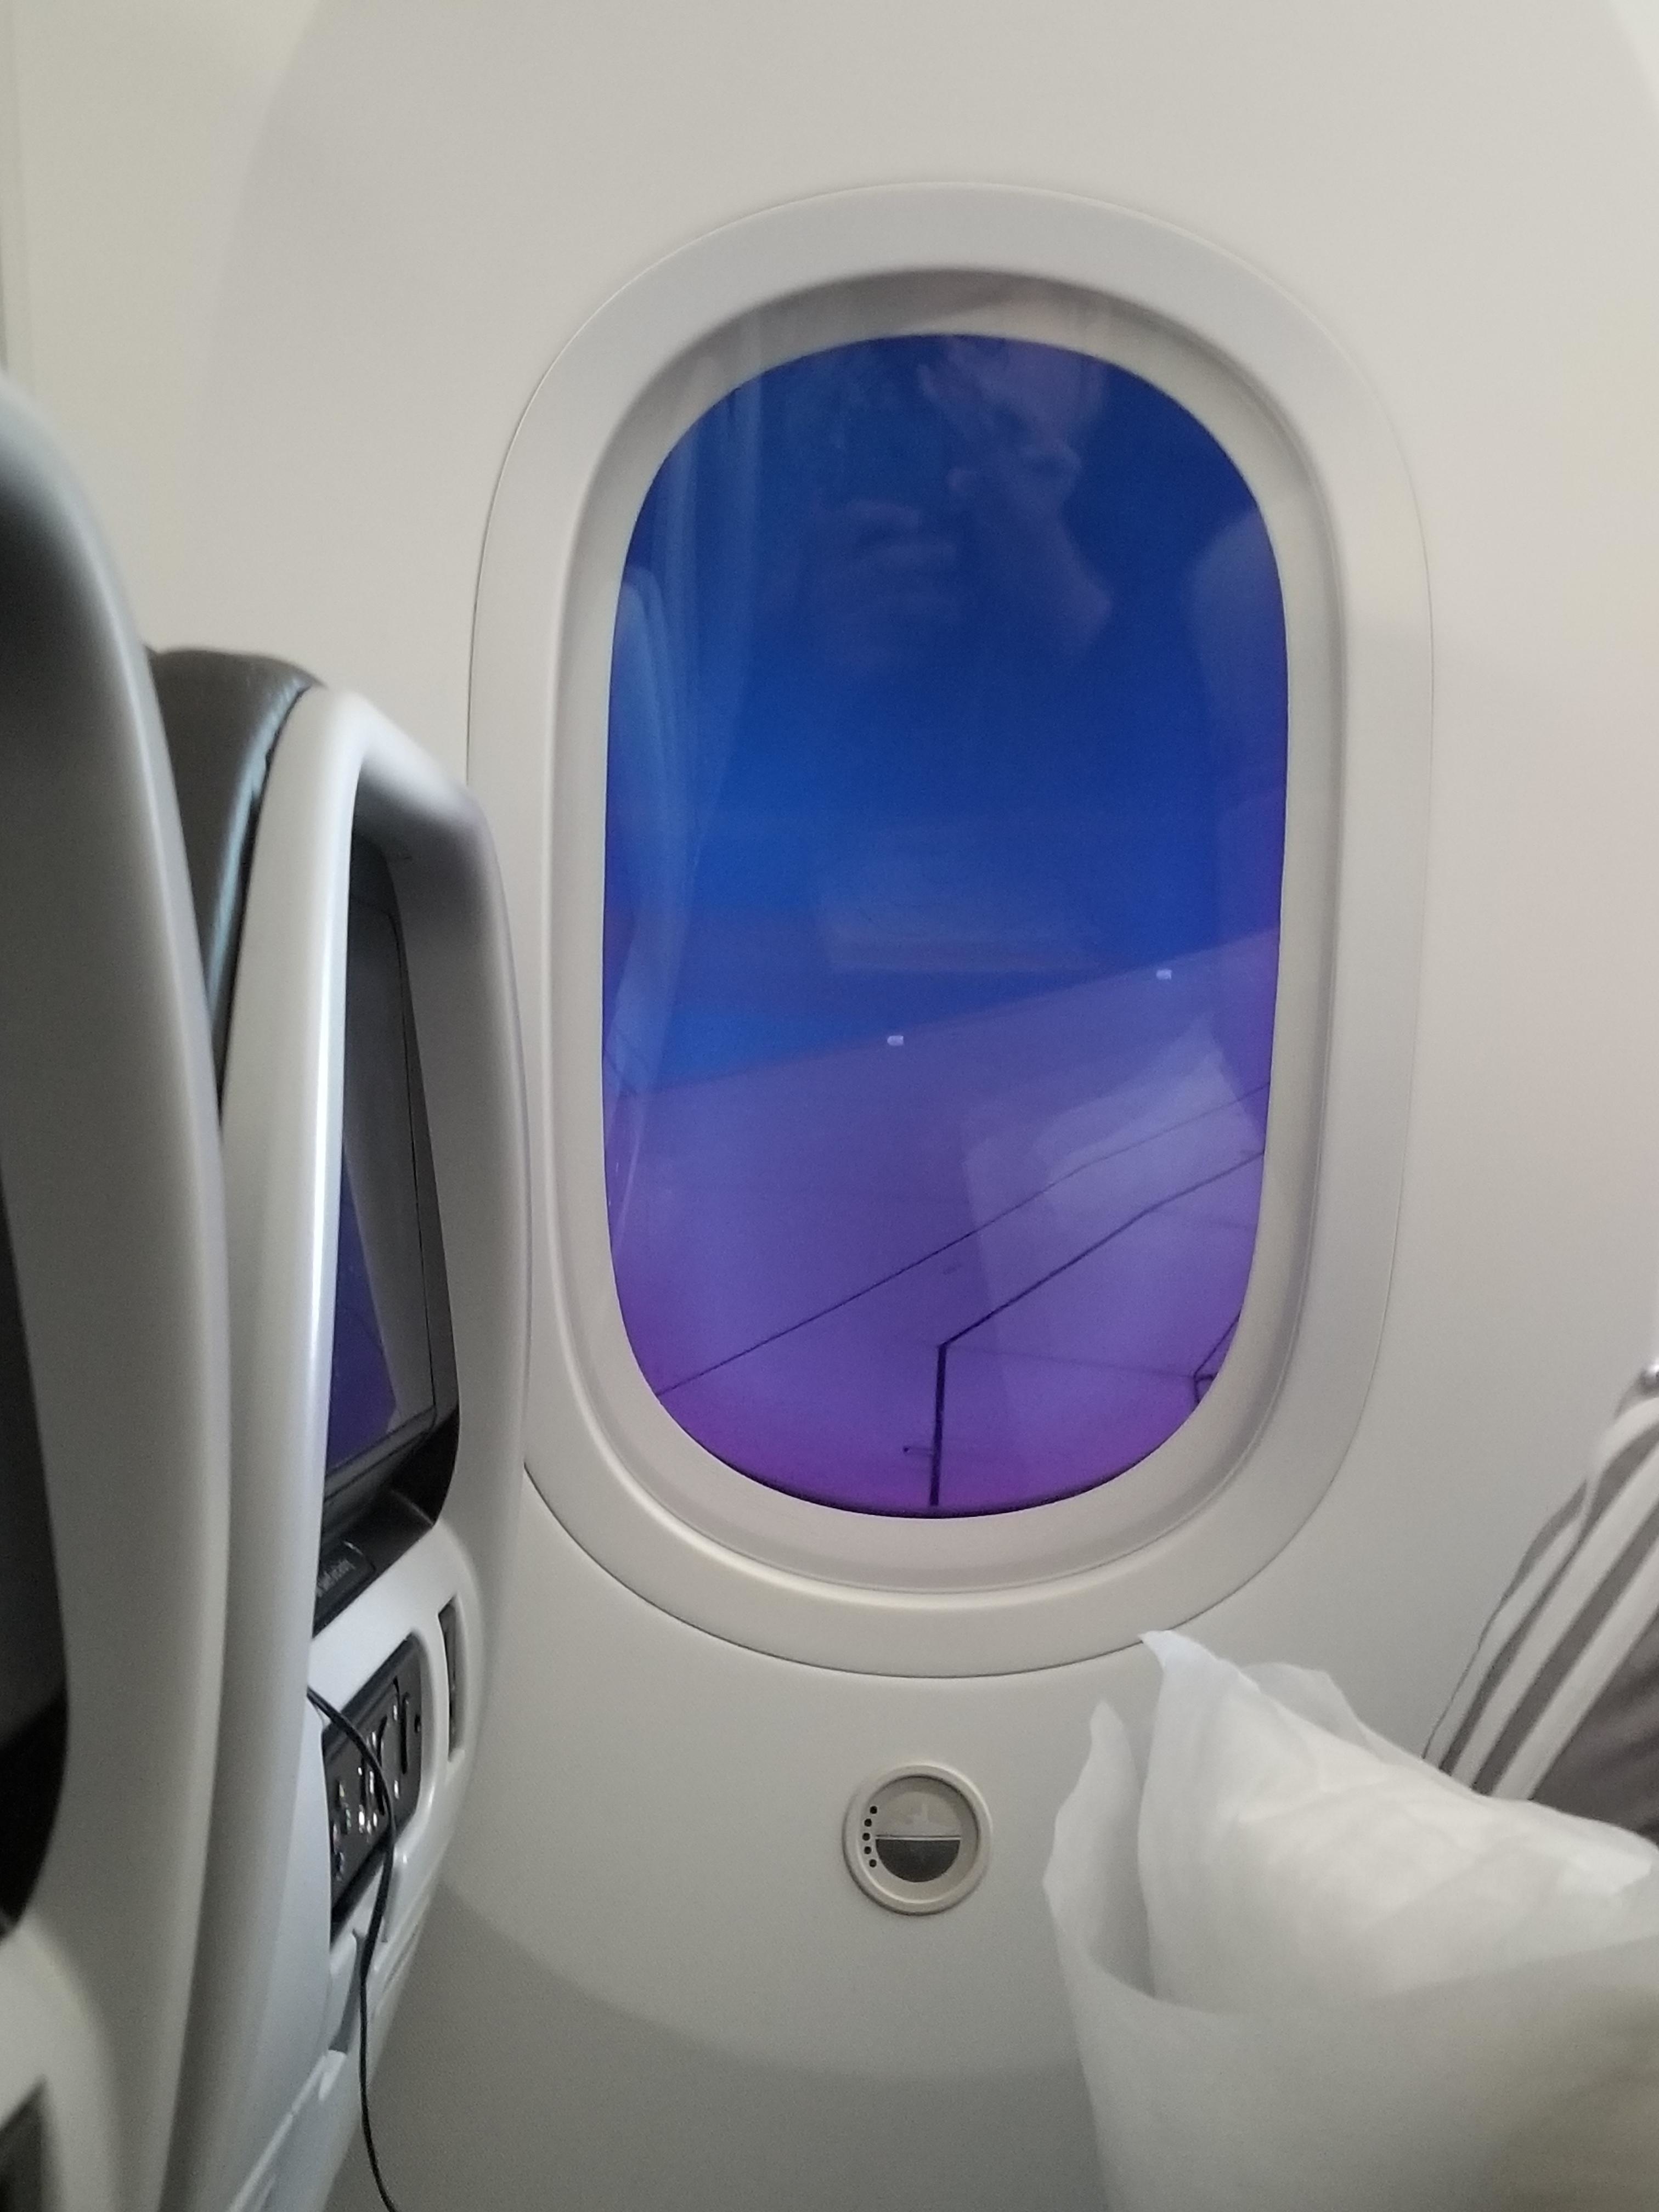 An adjustable plane window